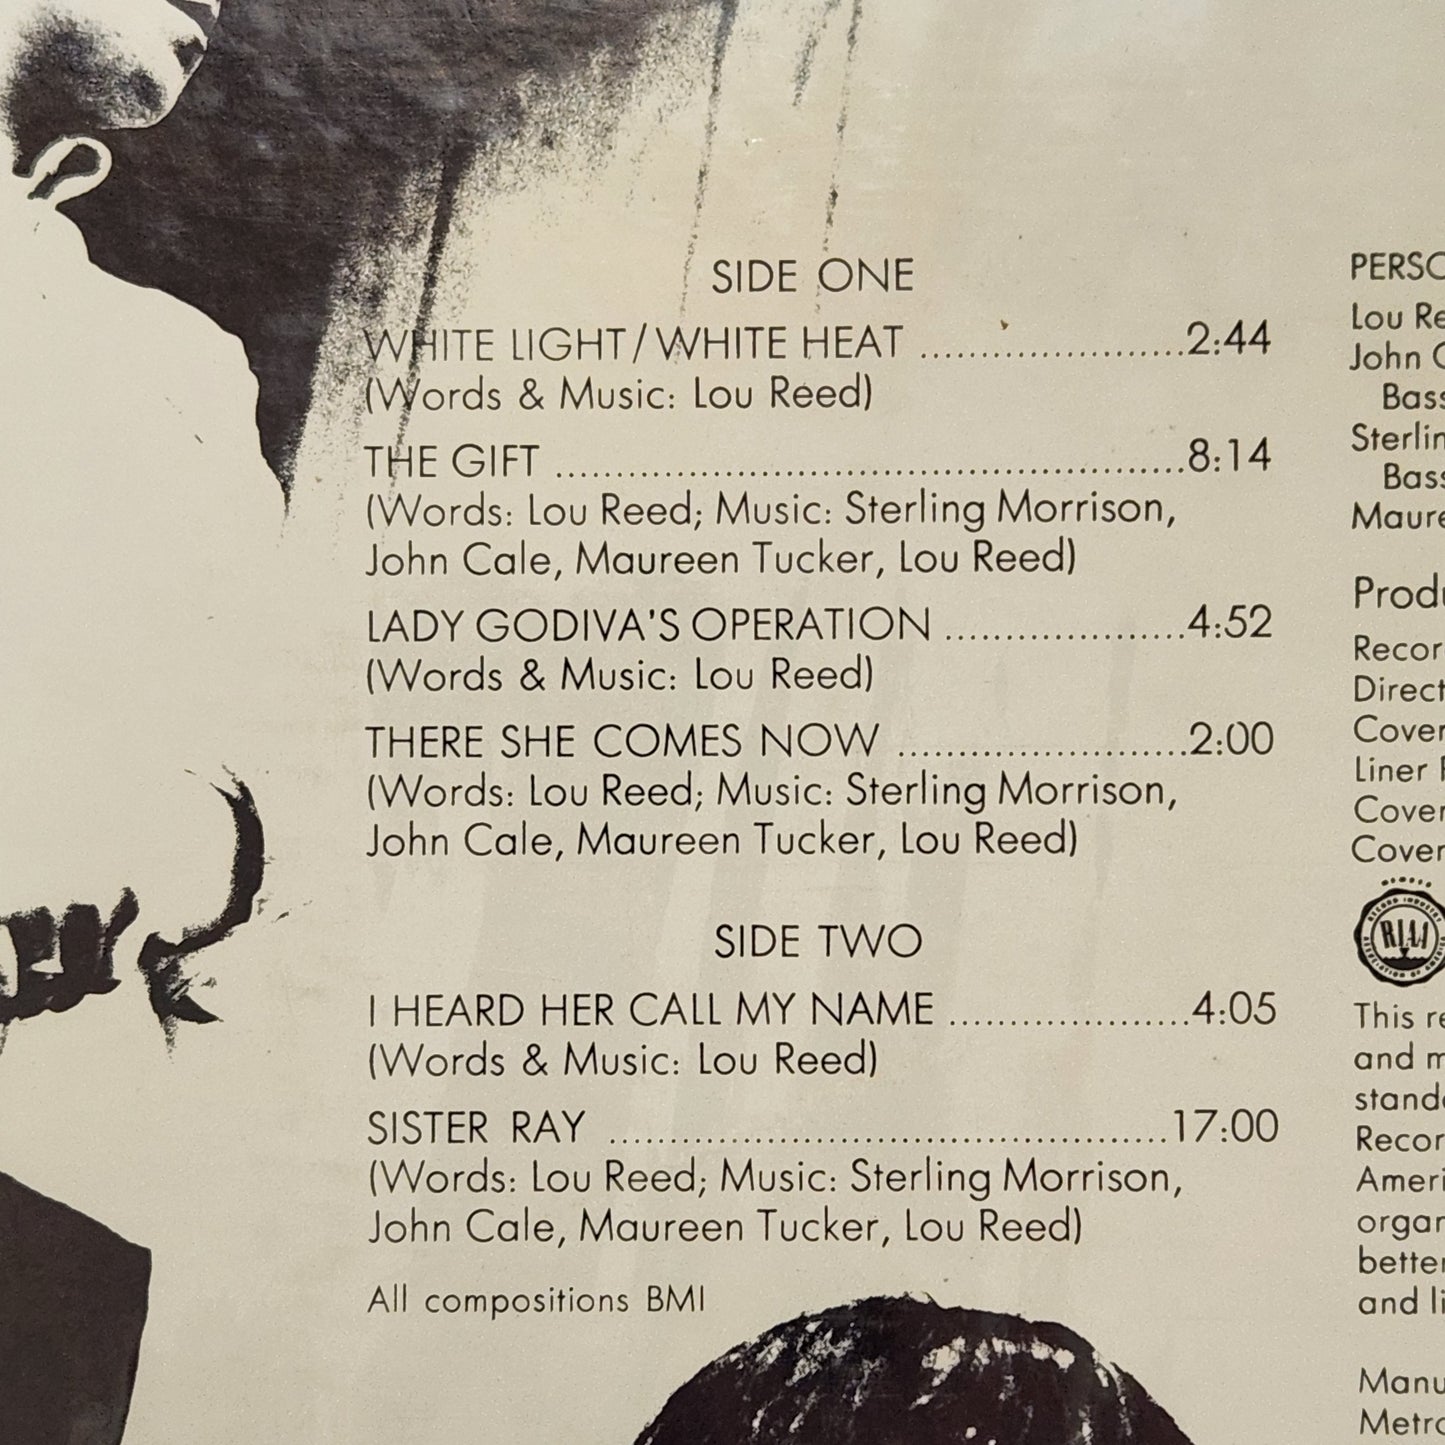 Vevlet Underground "White Light / White Heat" Original 1968 US Pressing Record Album